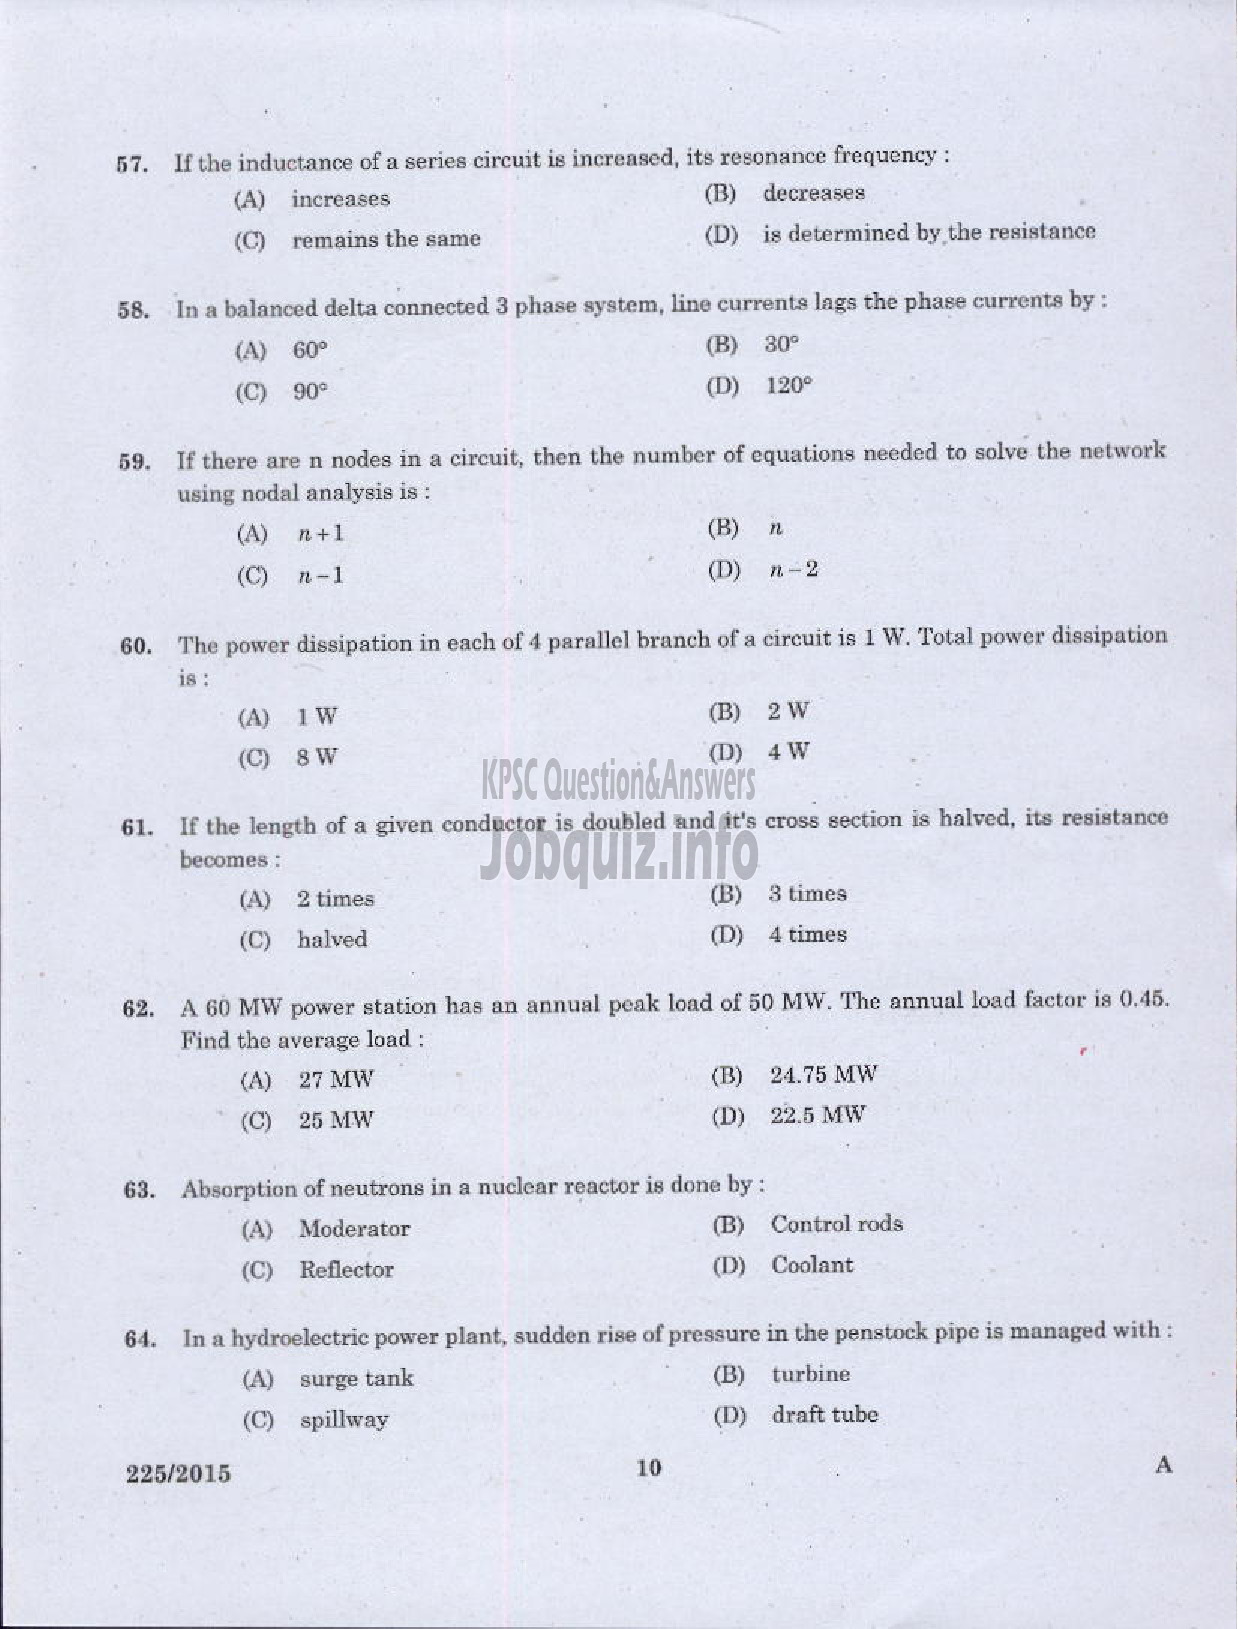 Kerala PSC Question Paper - VOCATIONAL TEACHER MAINTENANCE AND REPAIRS OF DOMESTIC APPLIANCES VHSE-8